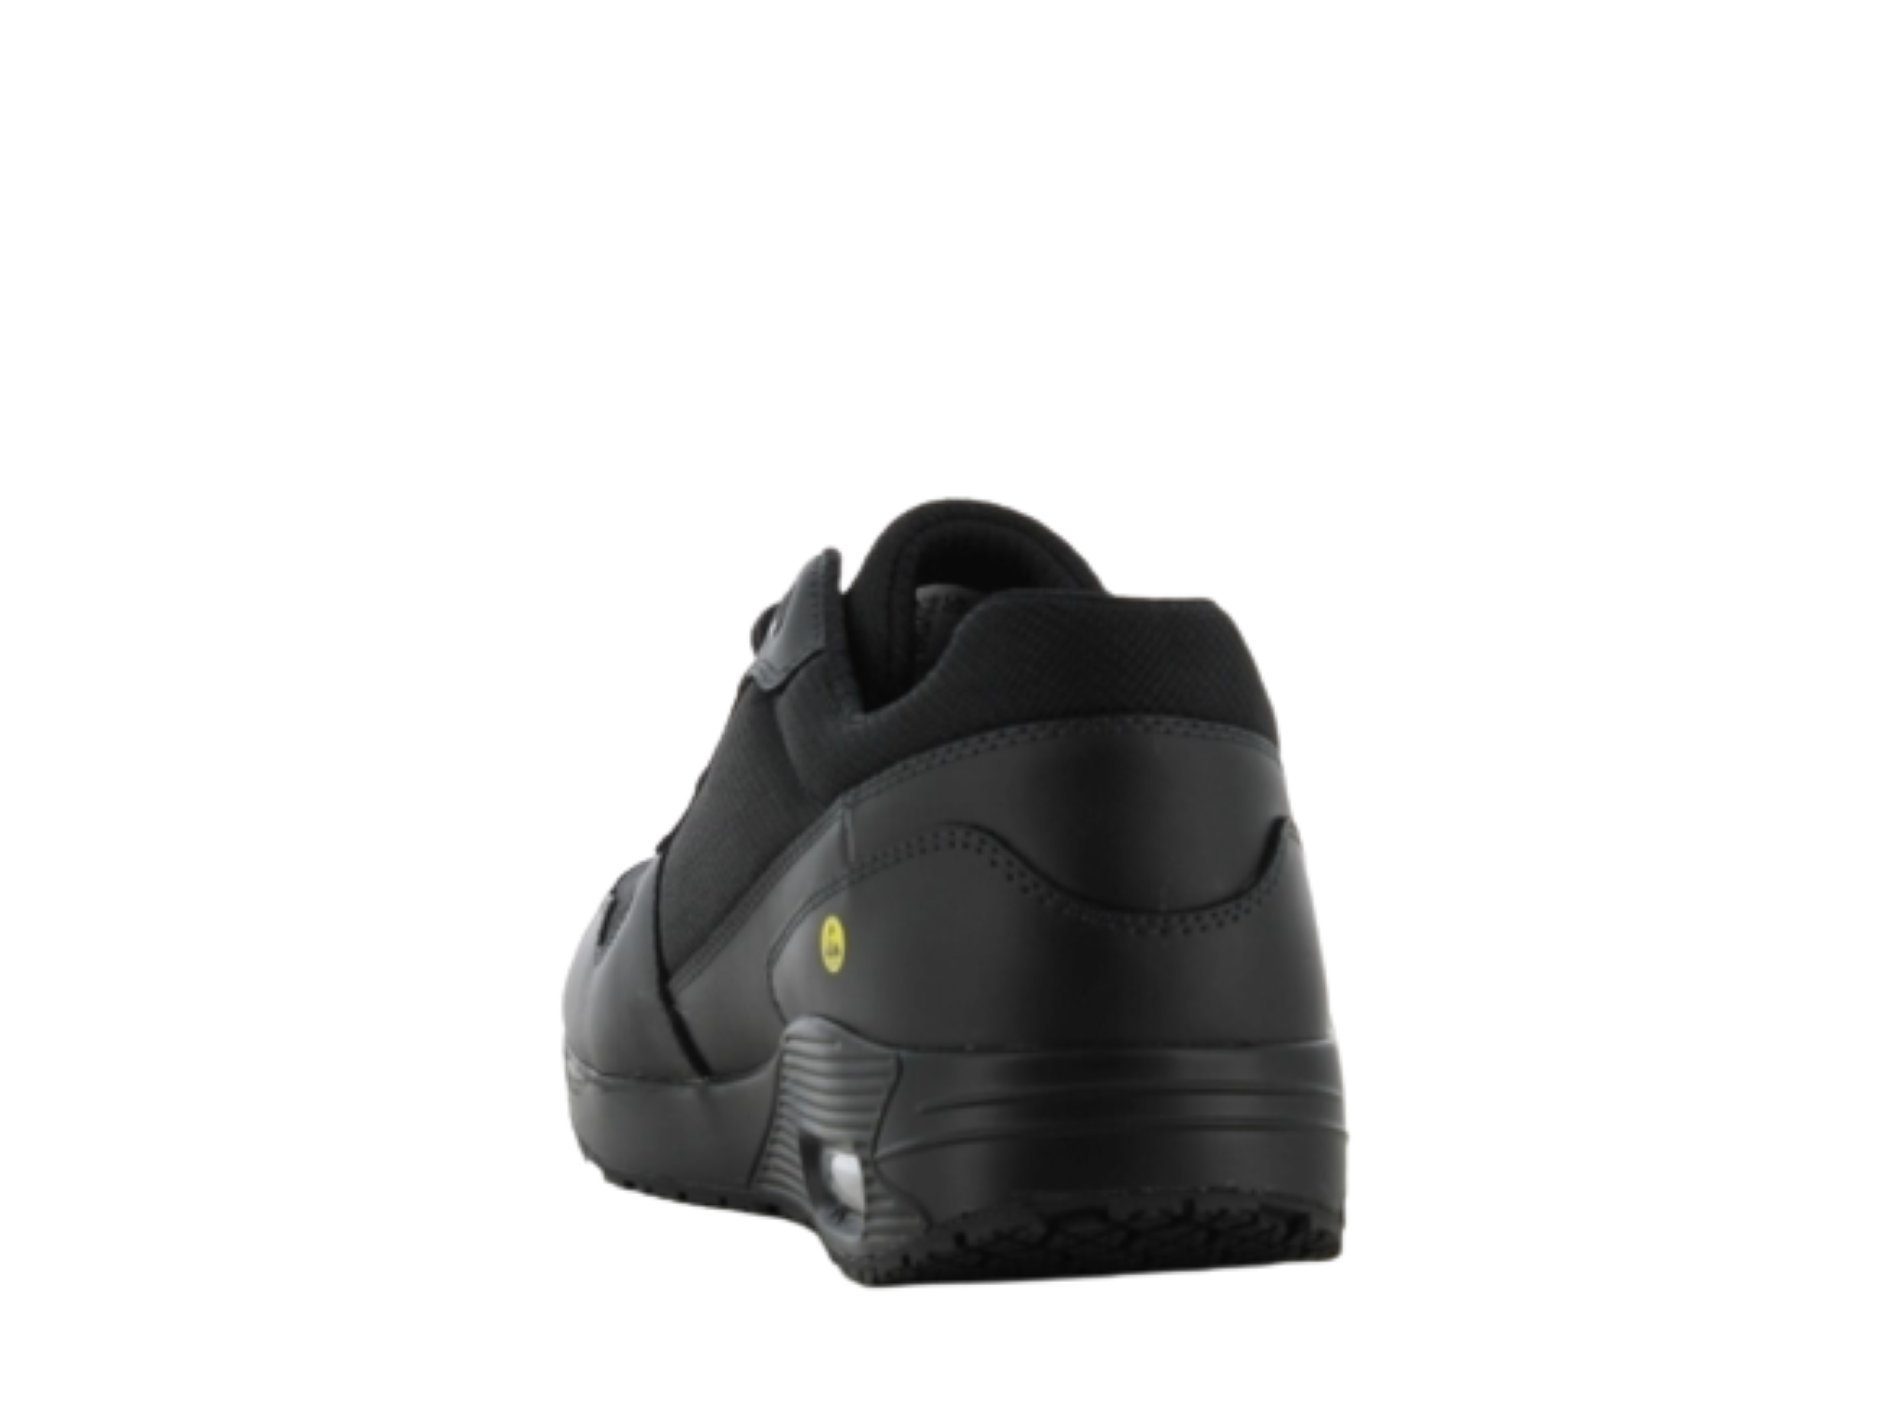 DOMINIQUE rutschfest Jogger Sneaker O1 Safety